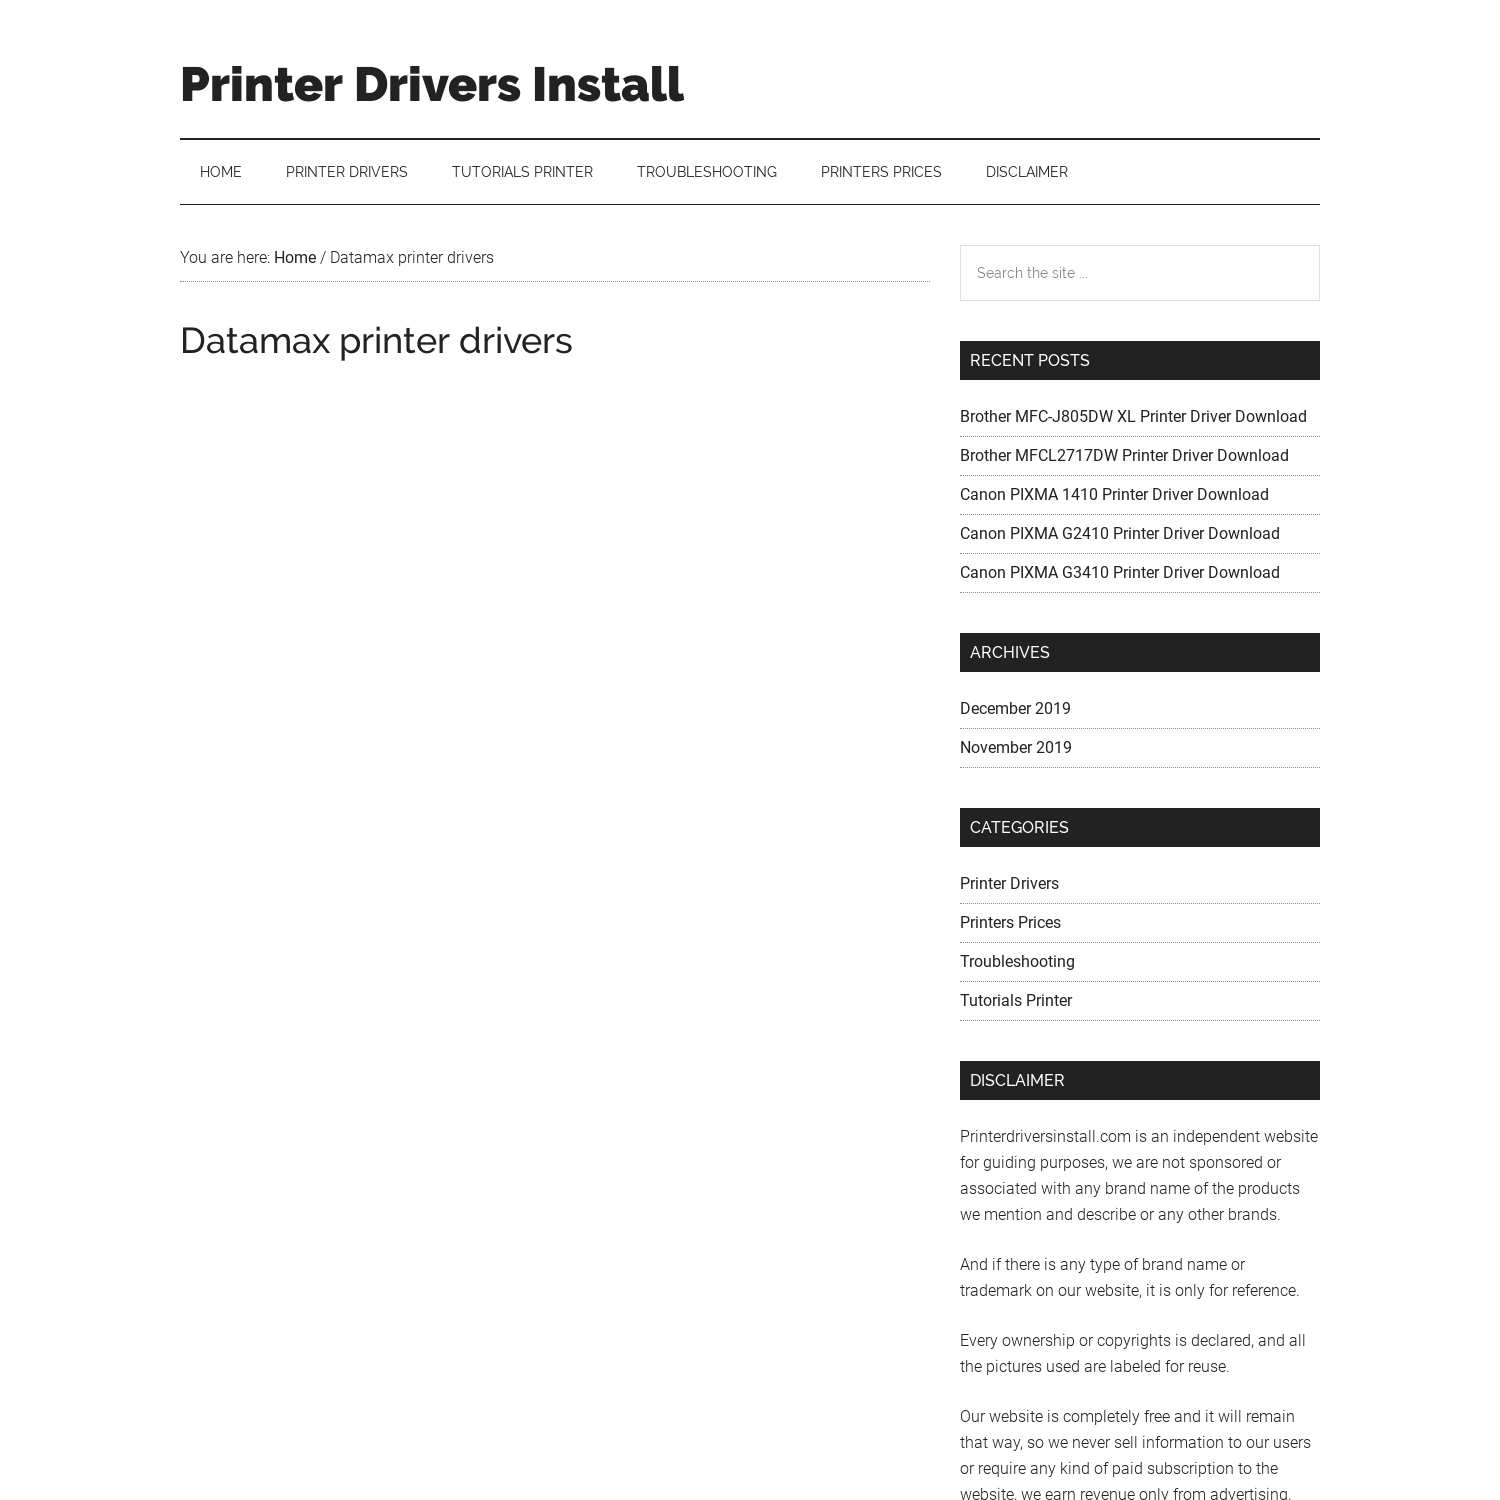 Datamax printer drivers - Printer Drivers Install